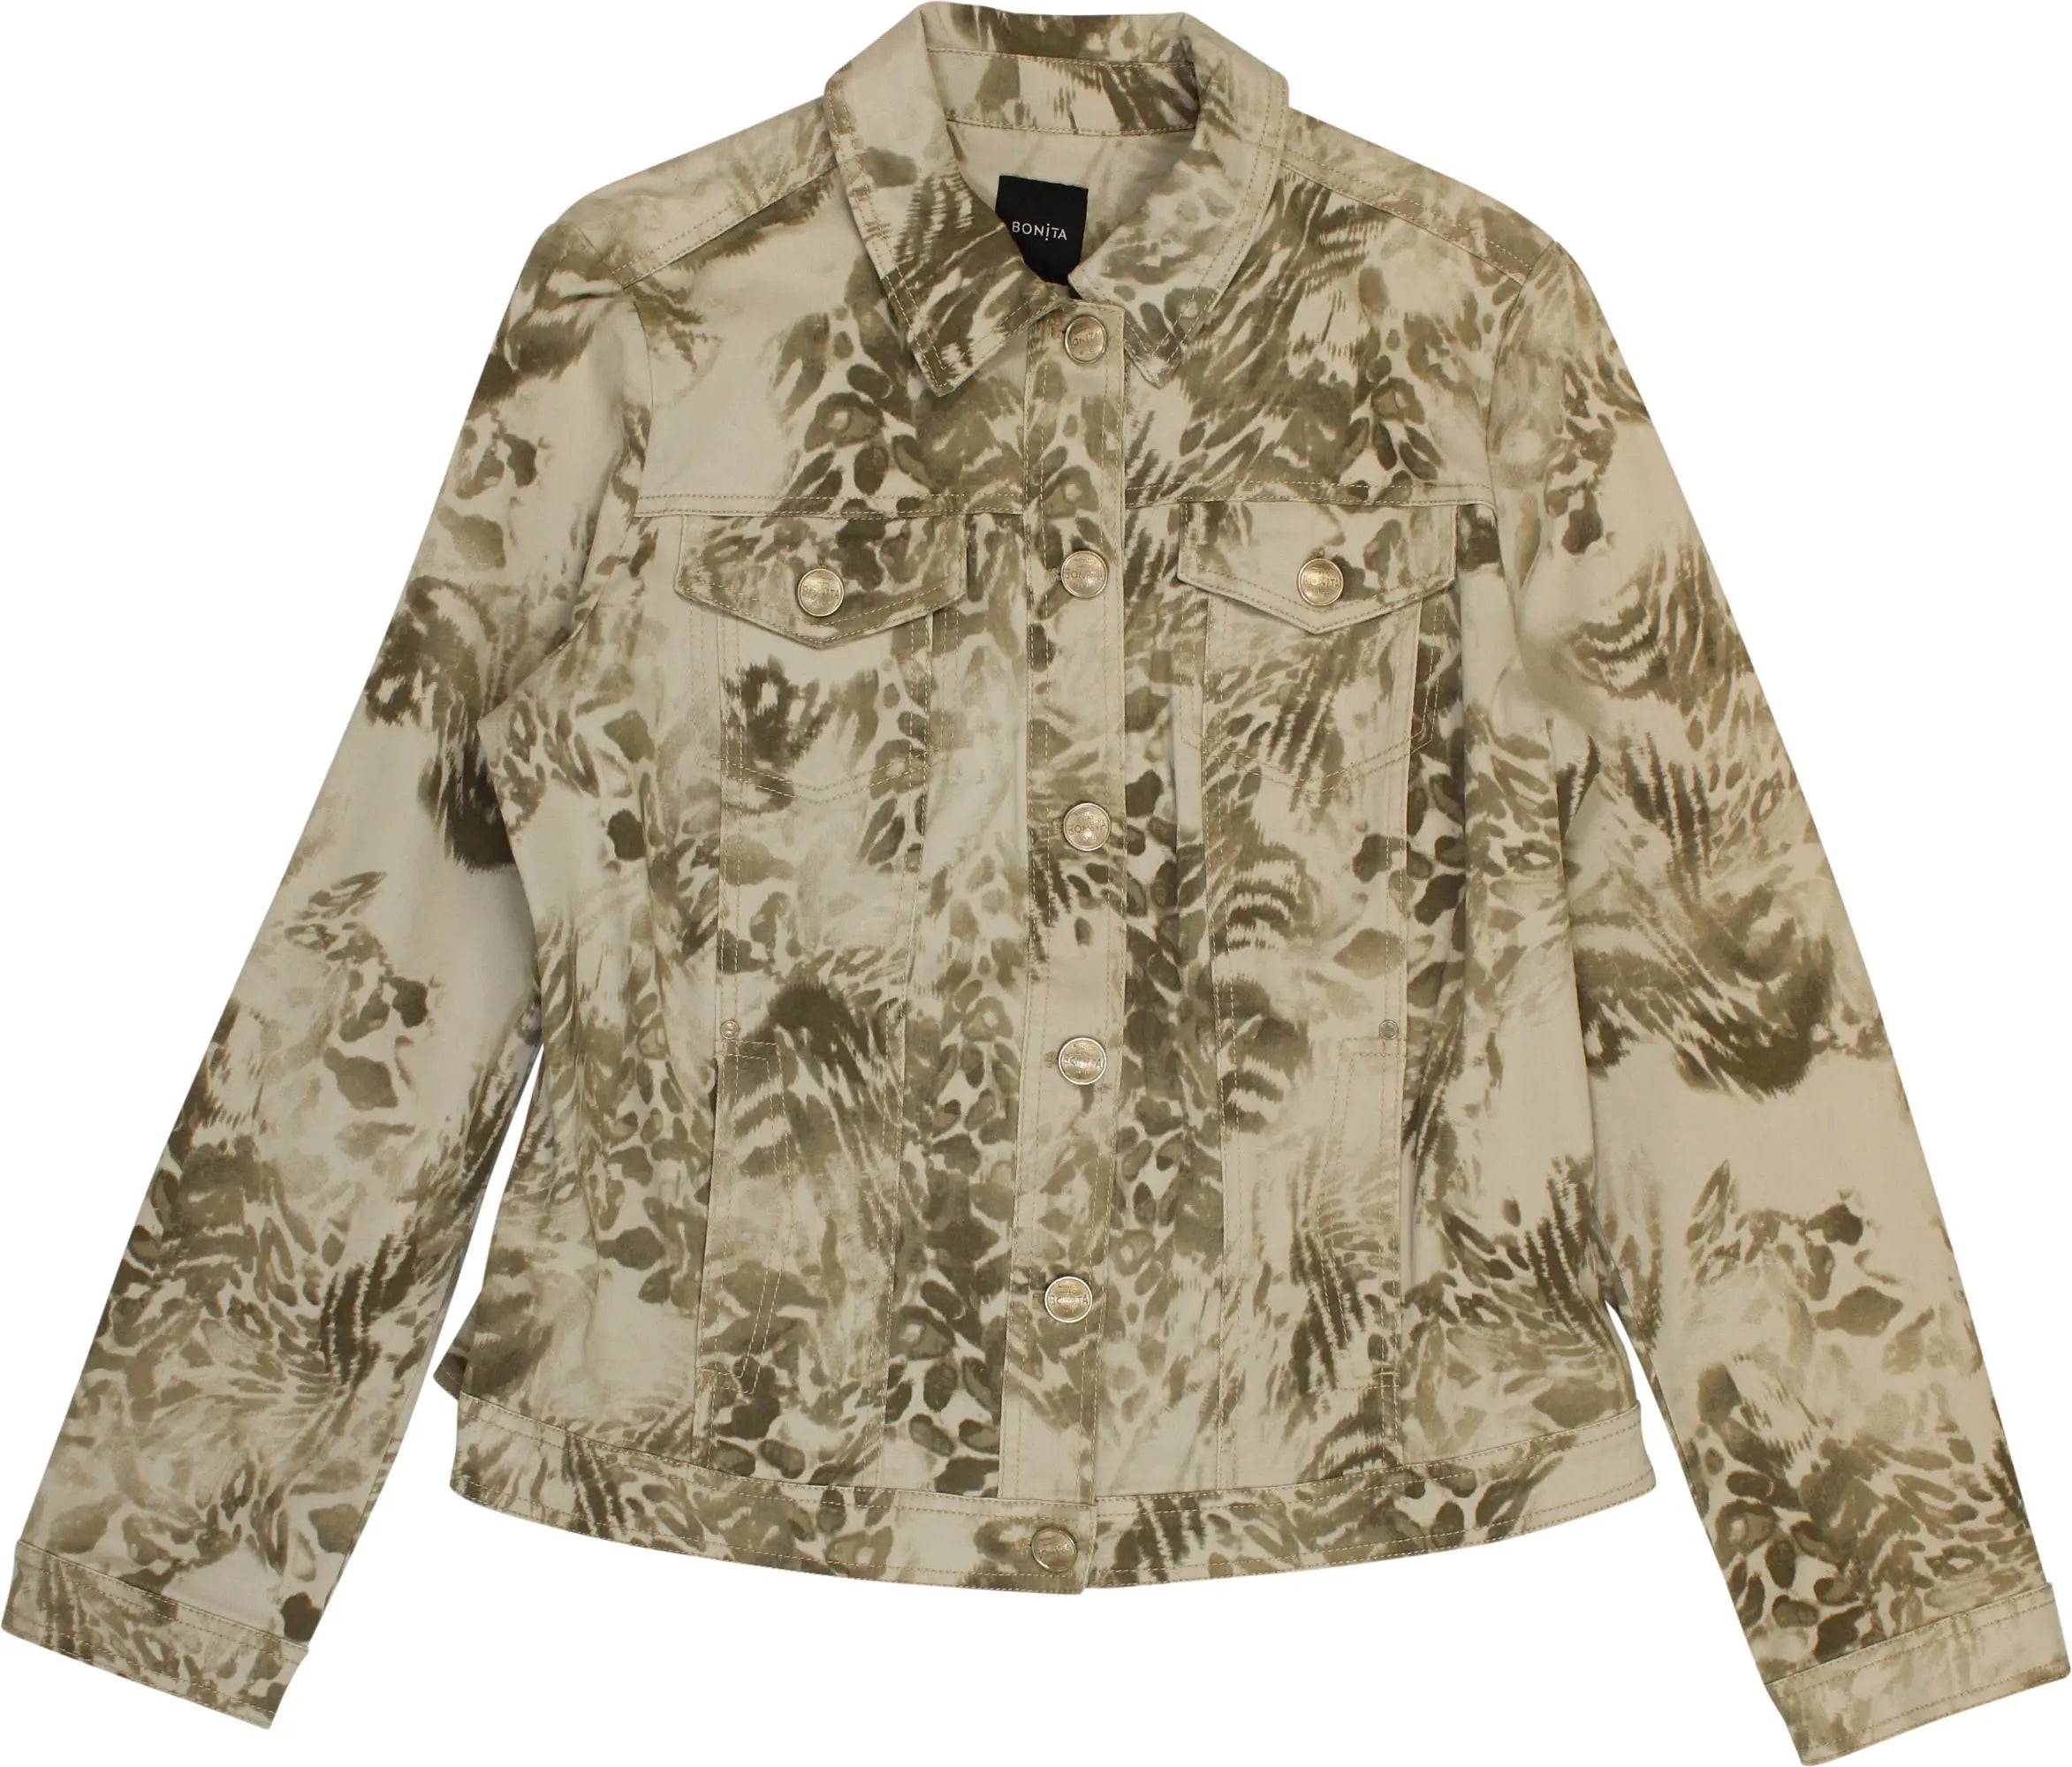 Bonita - Jacket- ThriftTale.com - Vintage and second handclothing